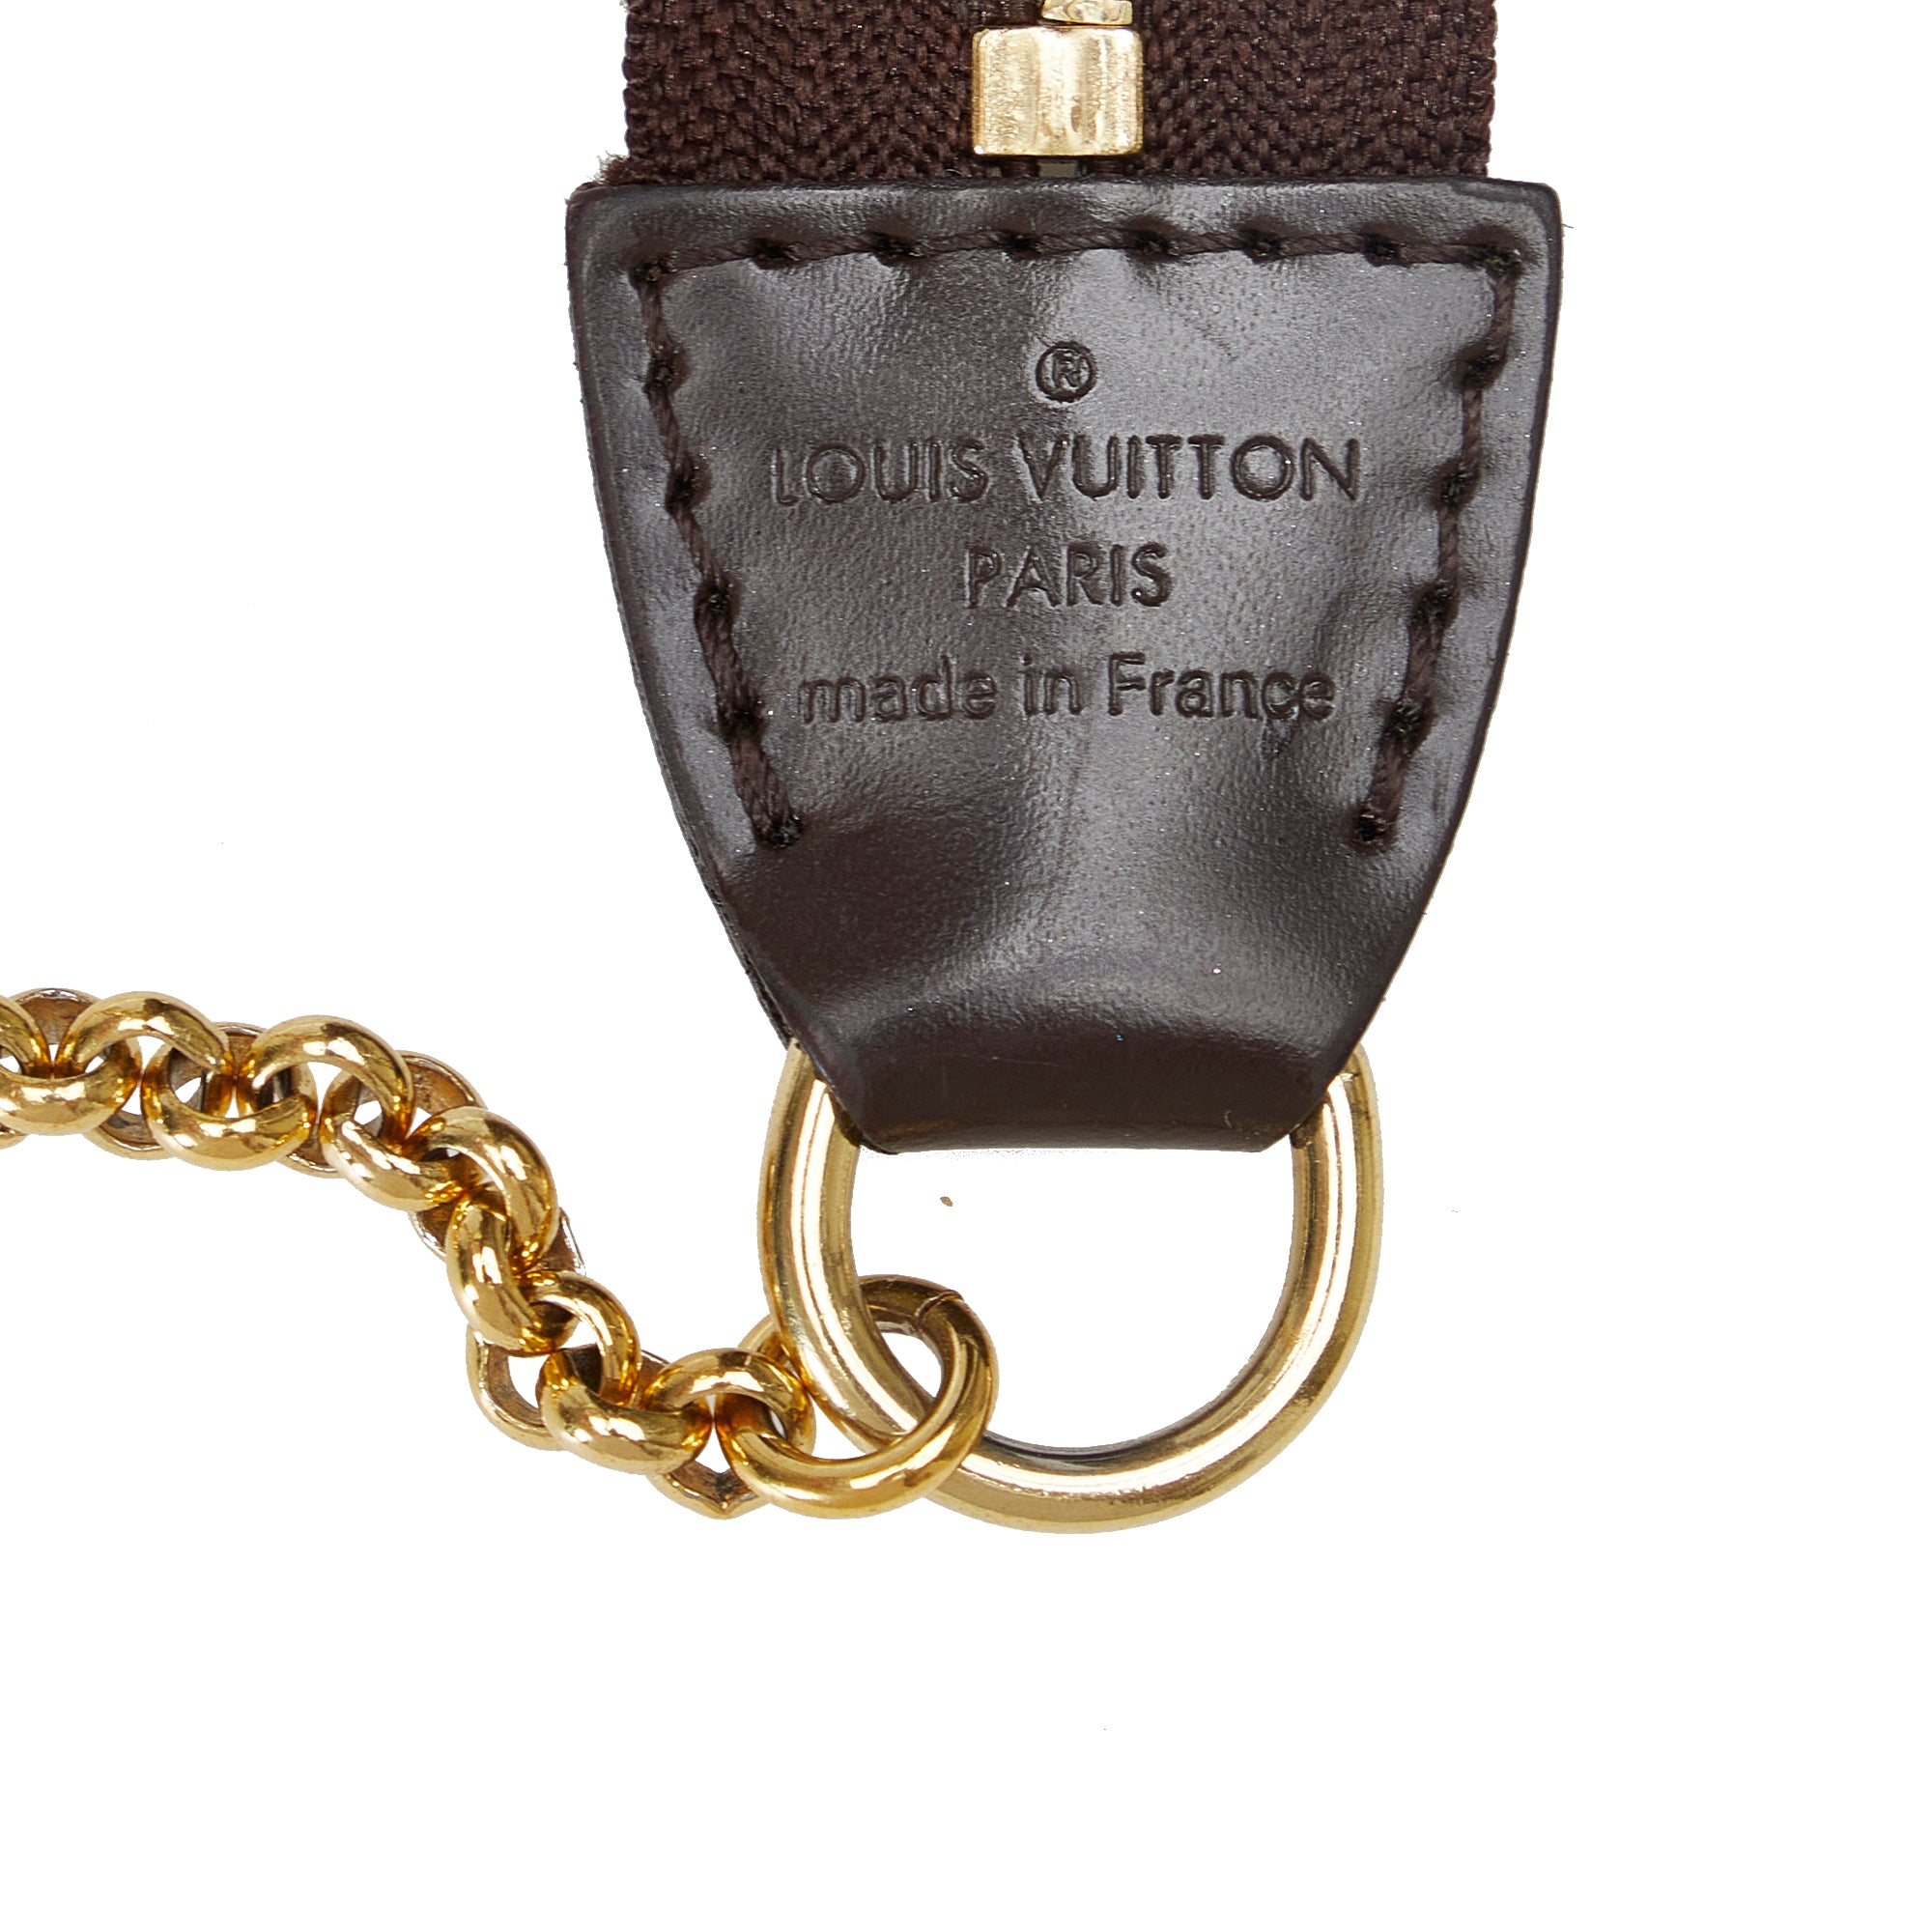 How To Spot A Fake Louis Vuitton  Authentic VS Fake Mini Pochette 